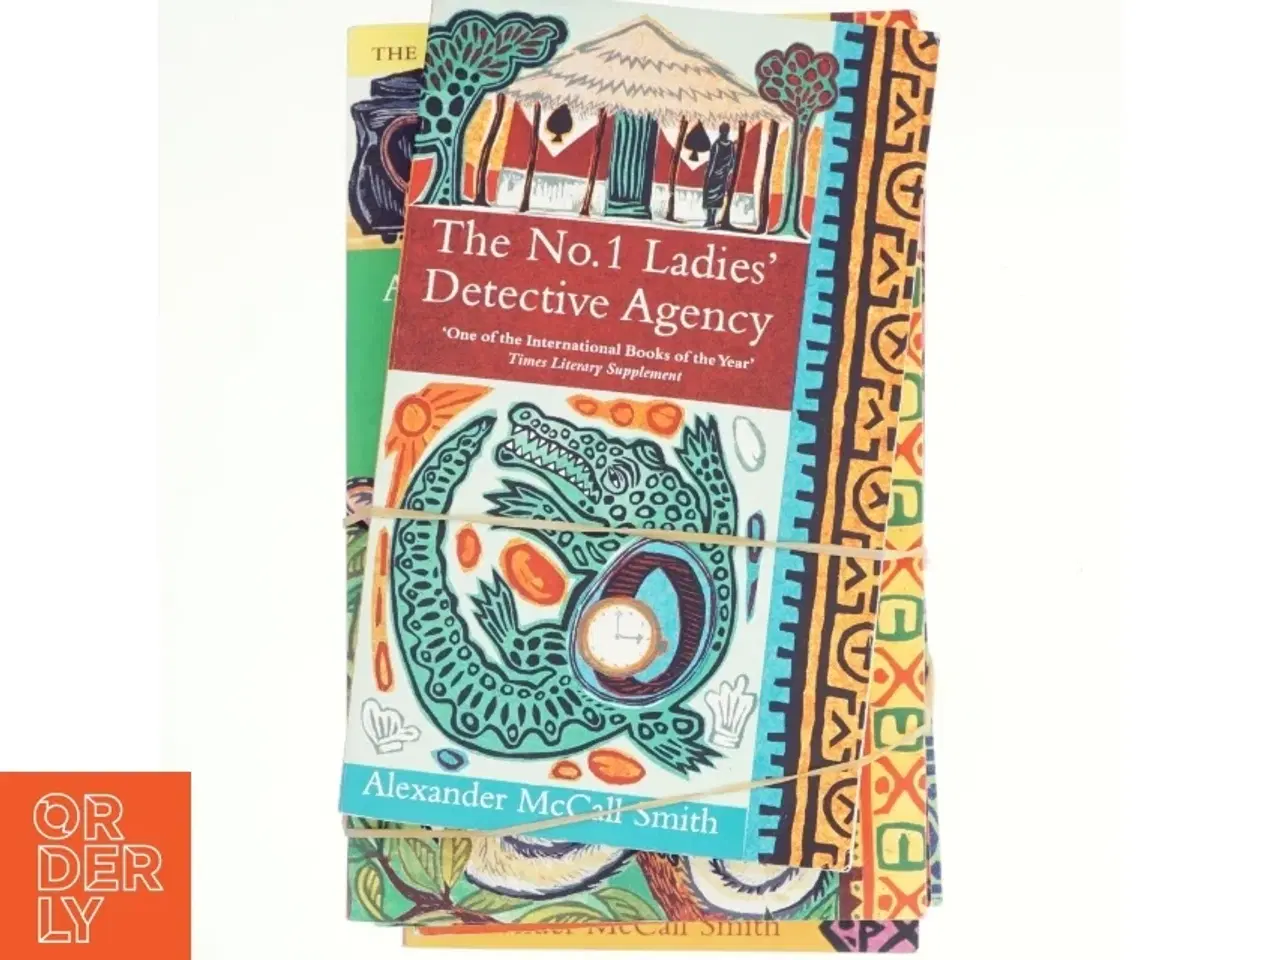 Billede 1 - Bogserie No. 1 Ladies Detective Agency Book Series af Alexander McCall Smith (8 books)